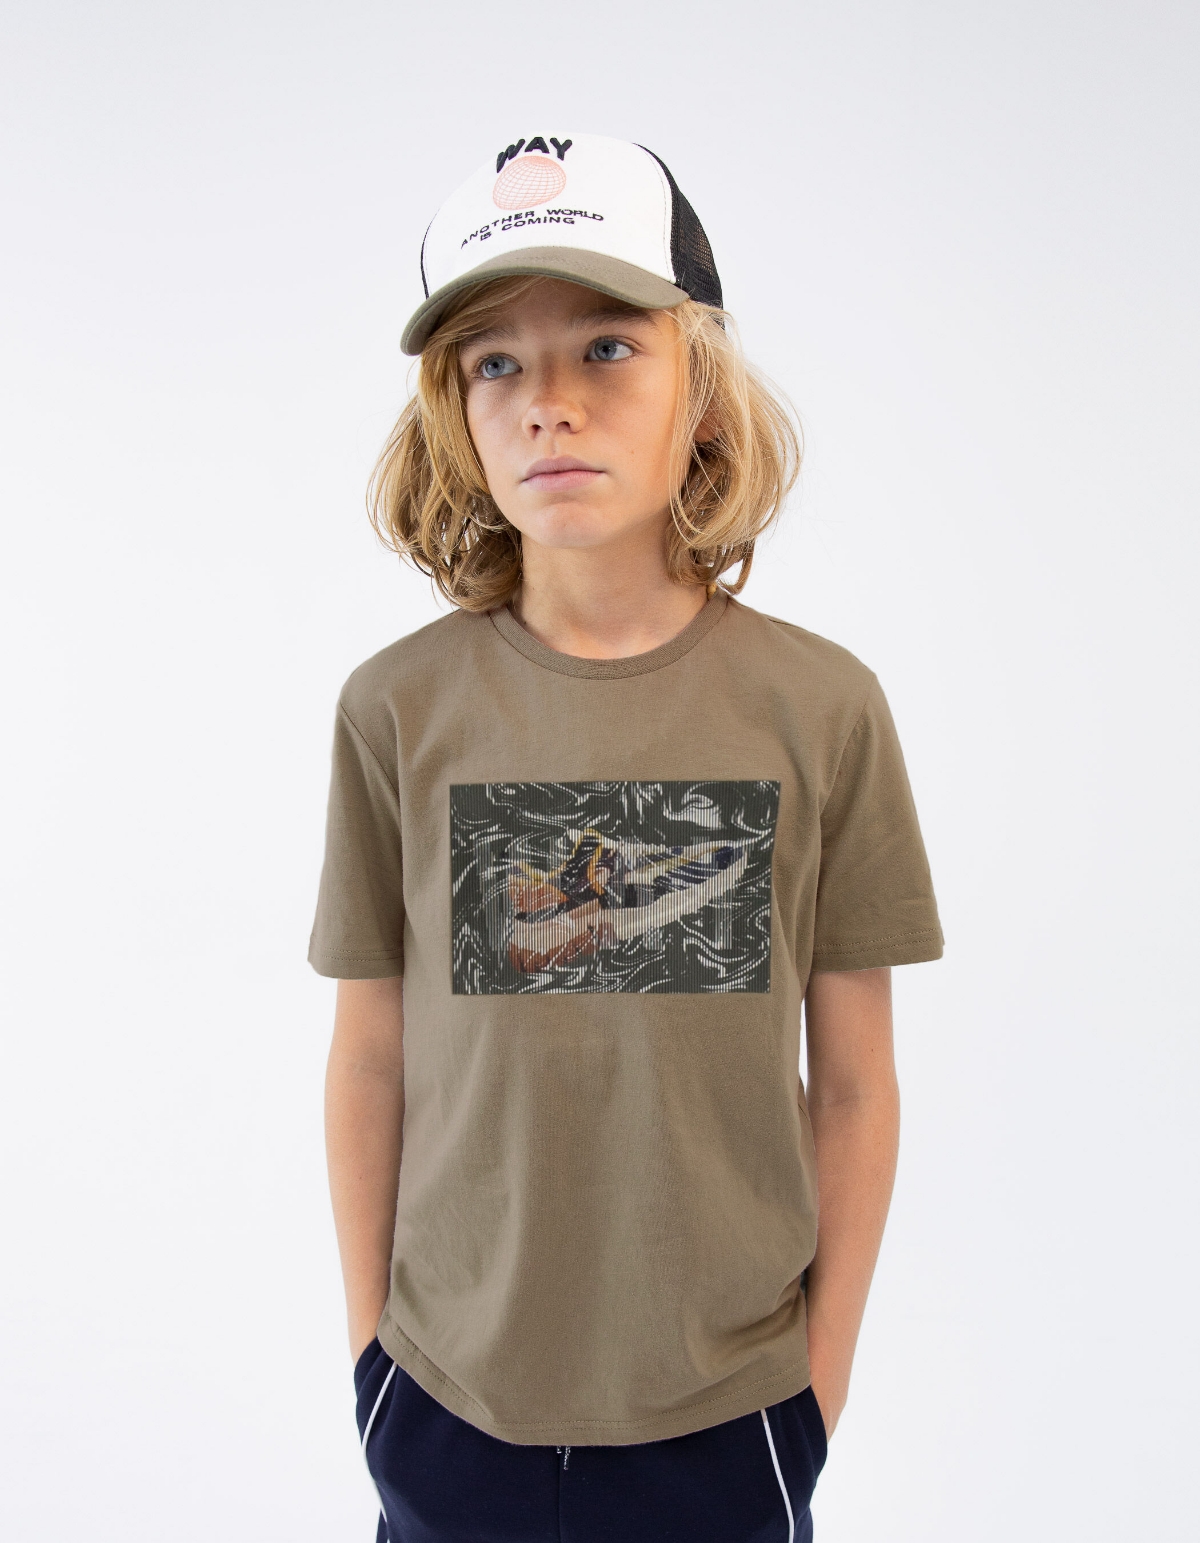 Boys’ khaki lenticular effect rubber image T-shirt